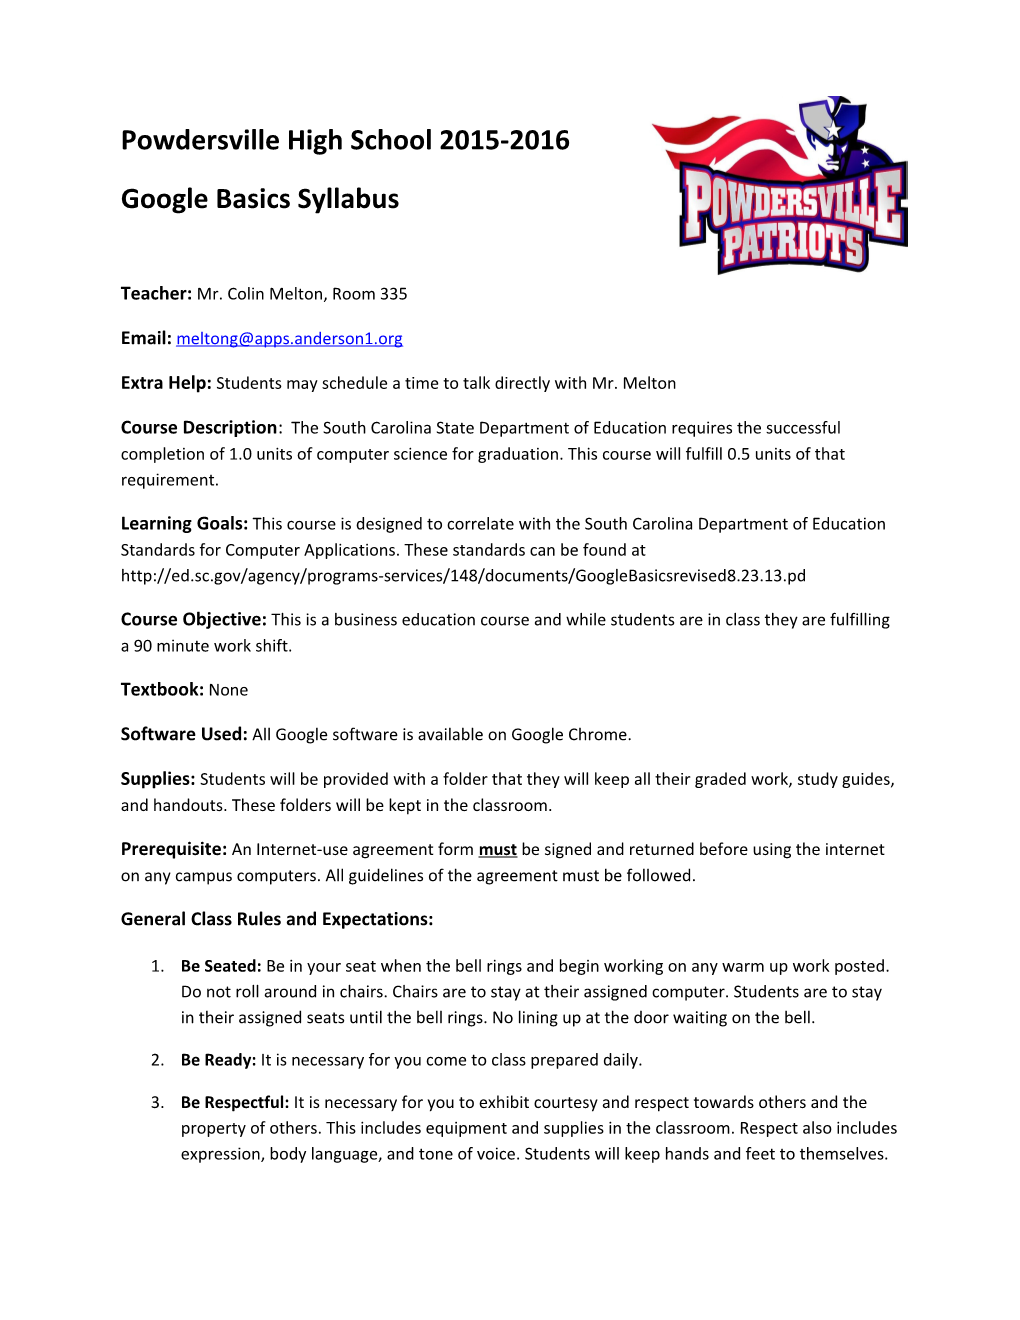 Google Basics Syllabus